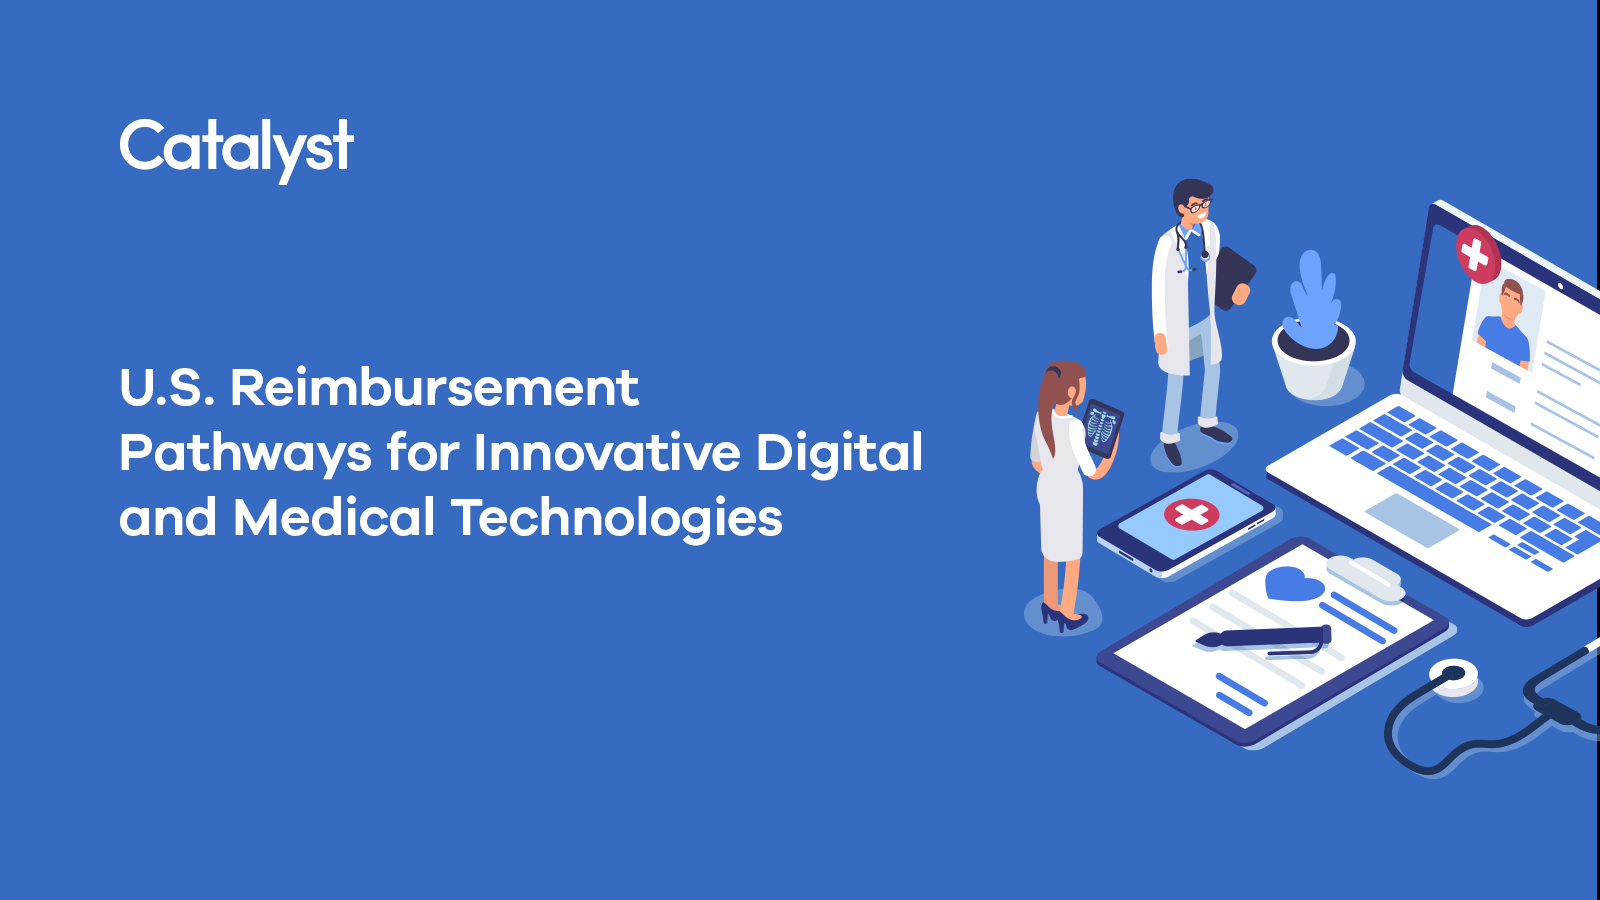 U.S. Reimbursement Pathways for Innovative Digital and Medical Technologies